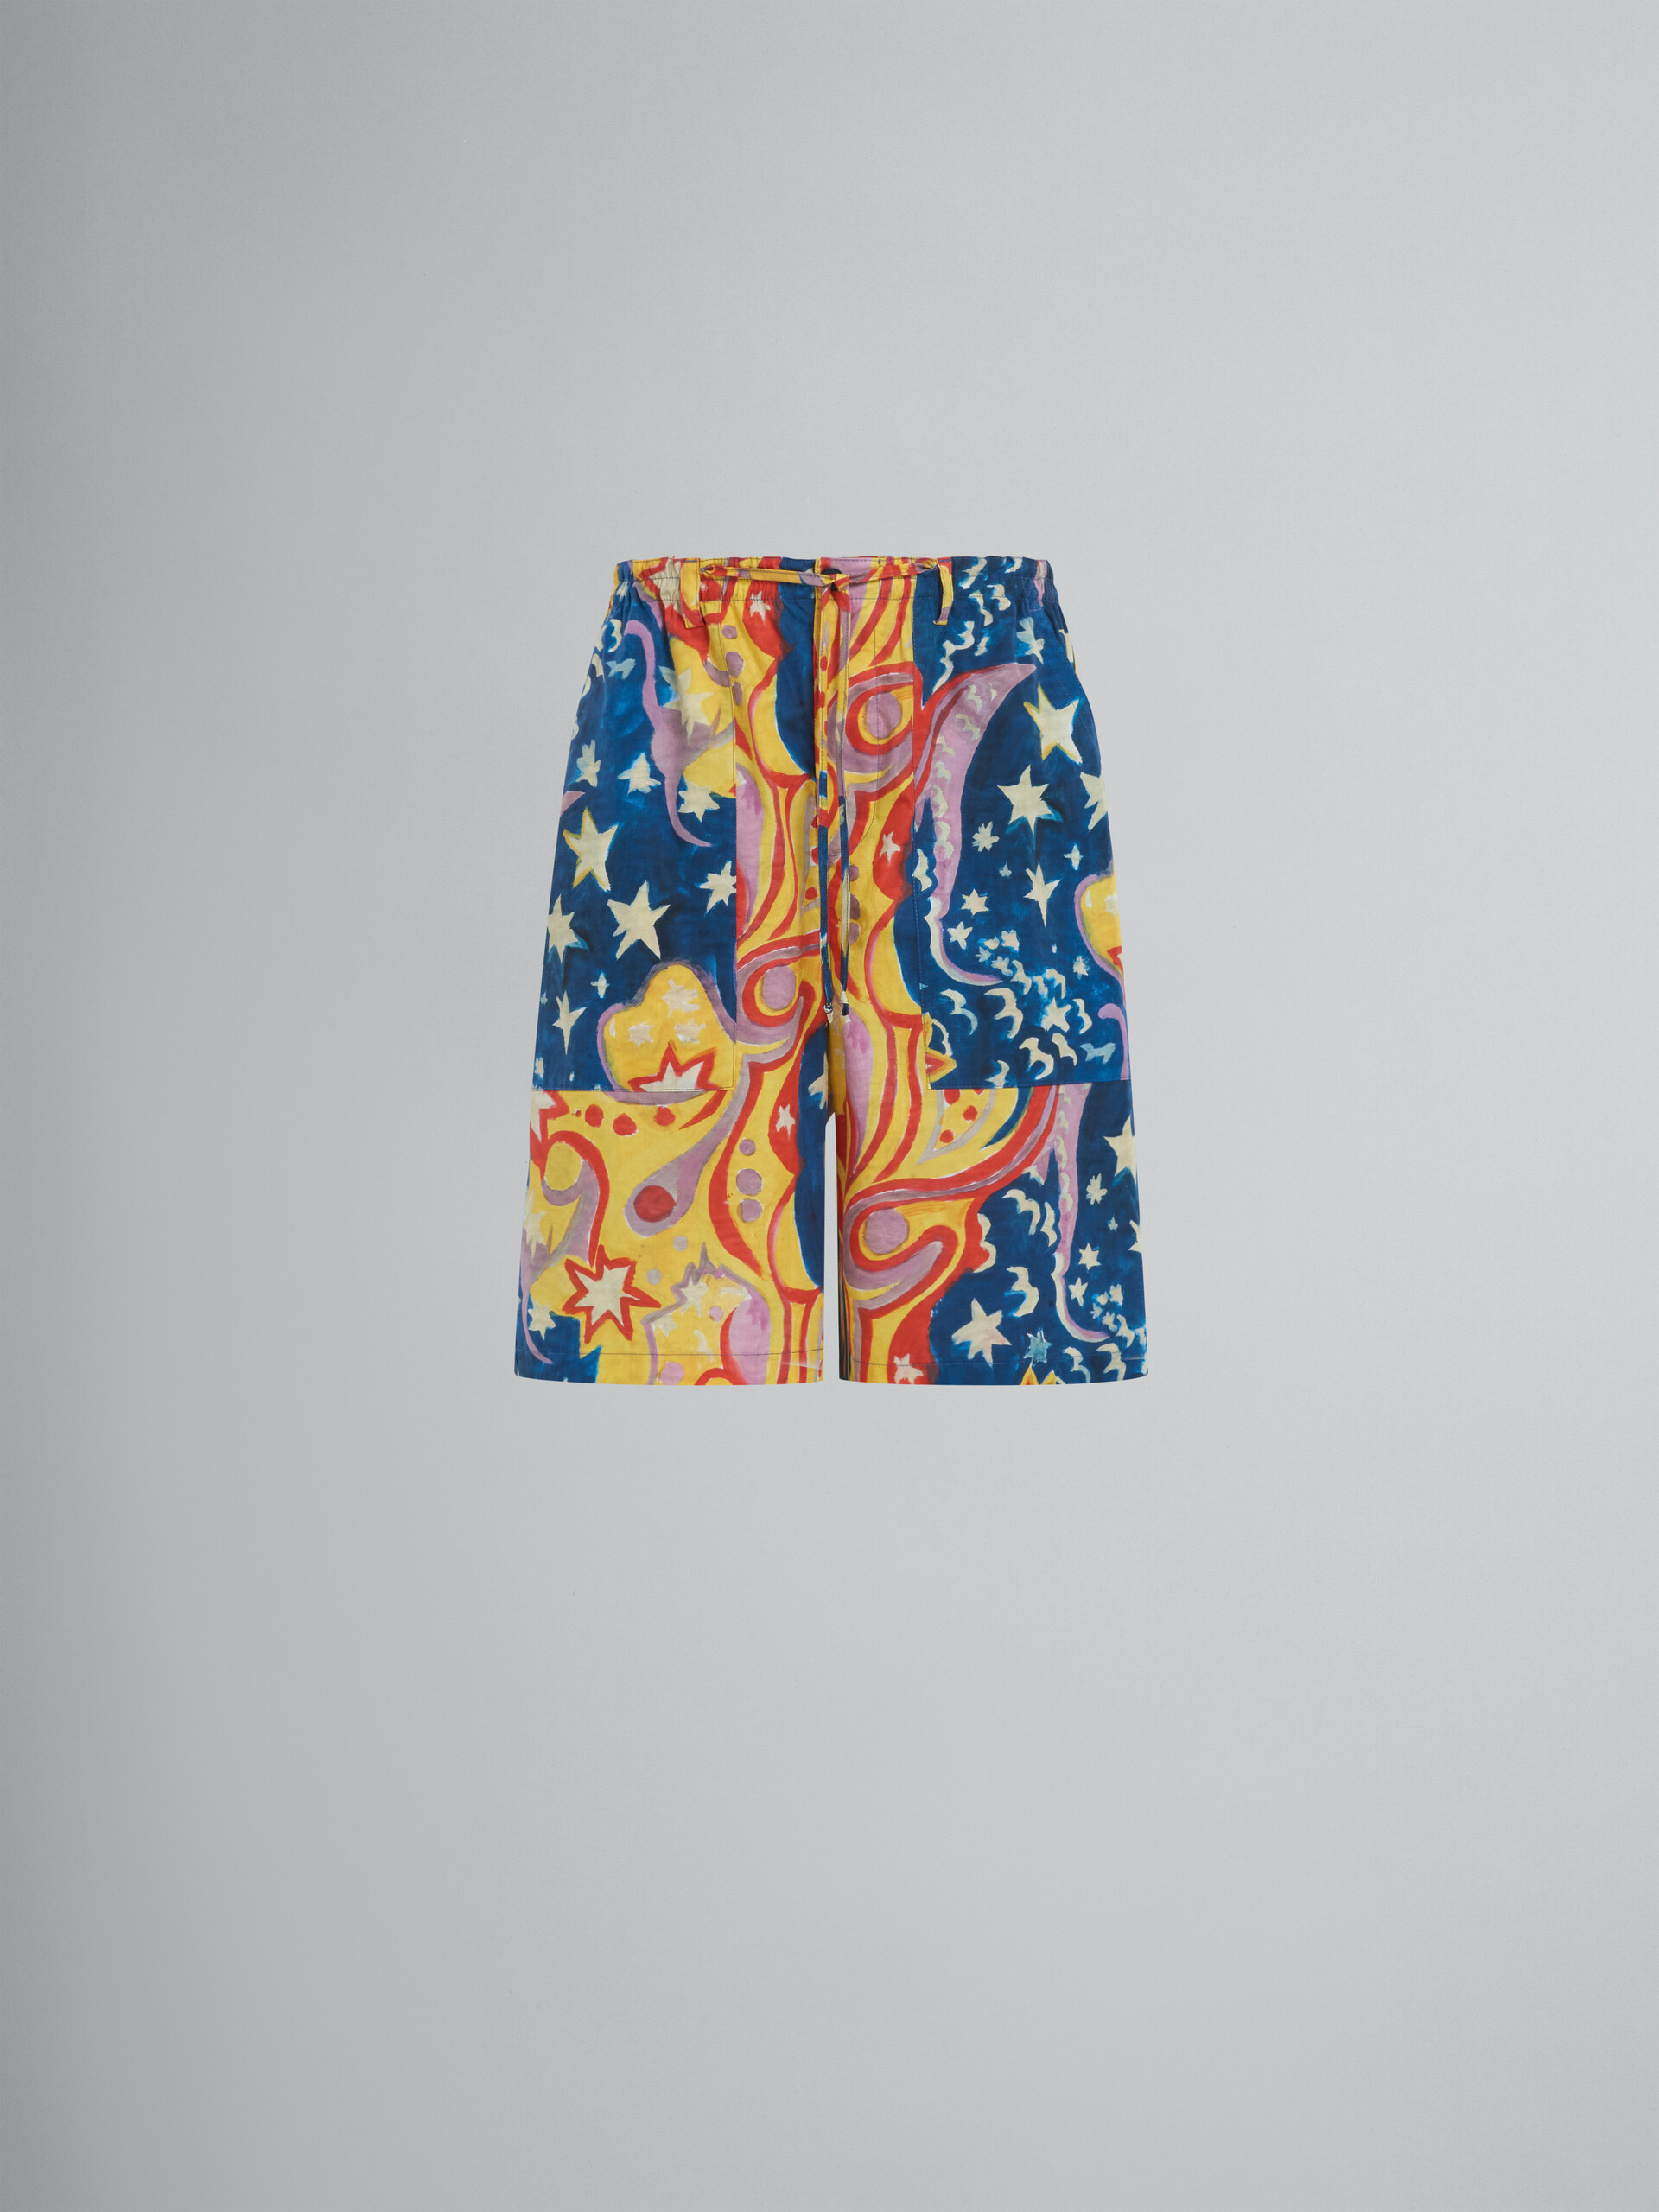 Marni x No Vacancy Inn - Poplin shorts with Galactic Paradise print. - Pants - Image 1